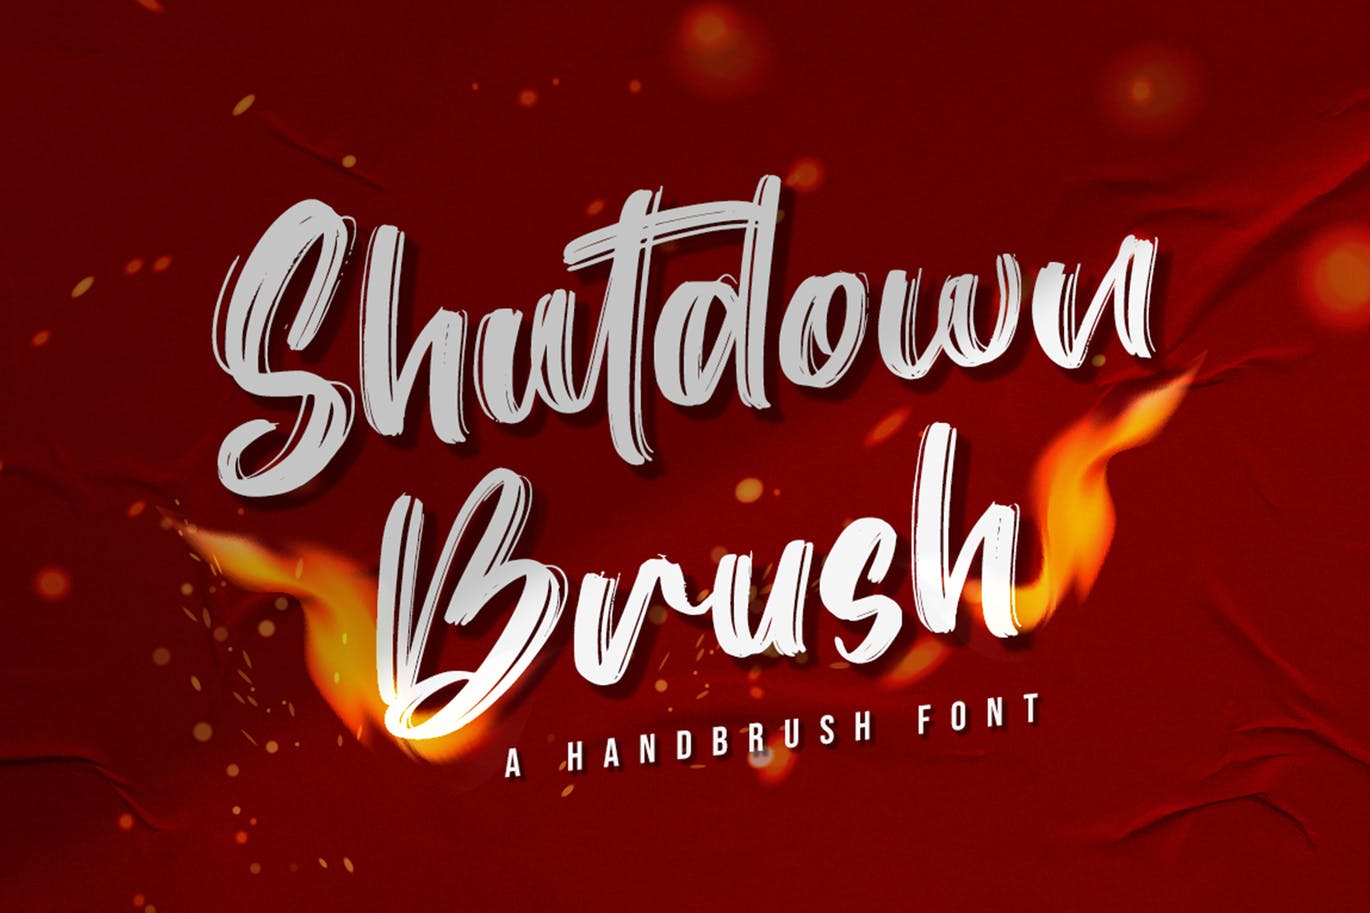 Shutdown Brush Font